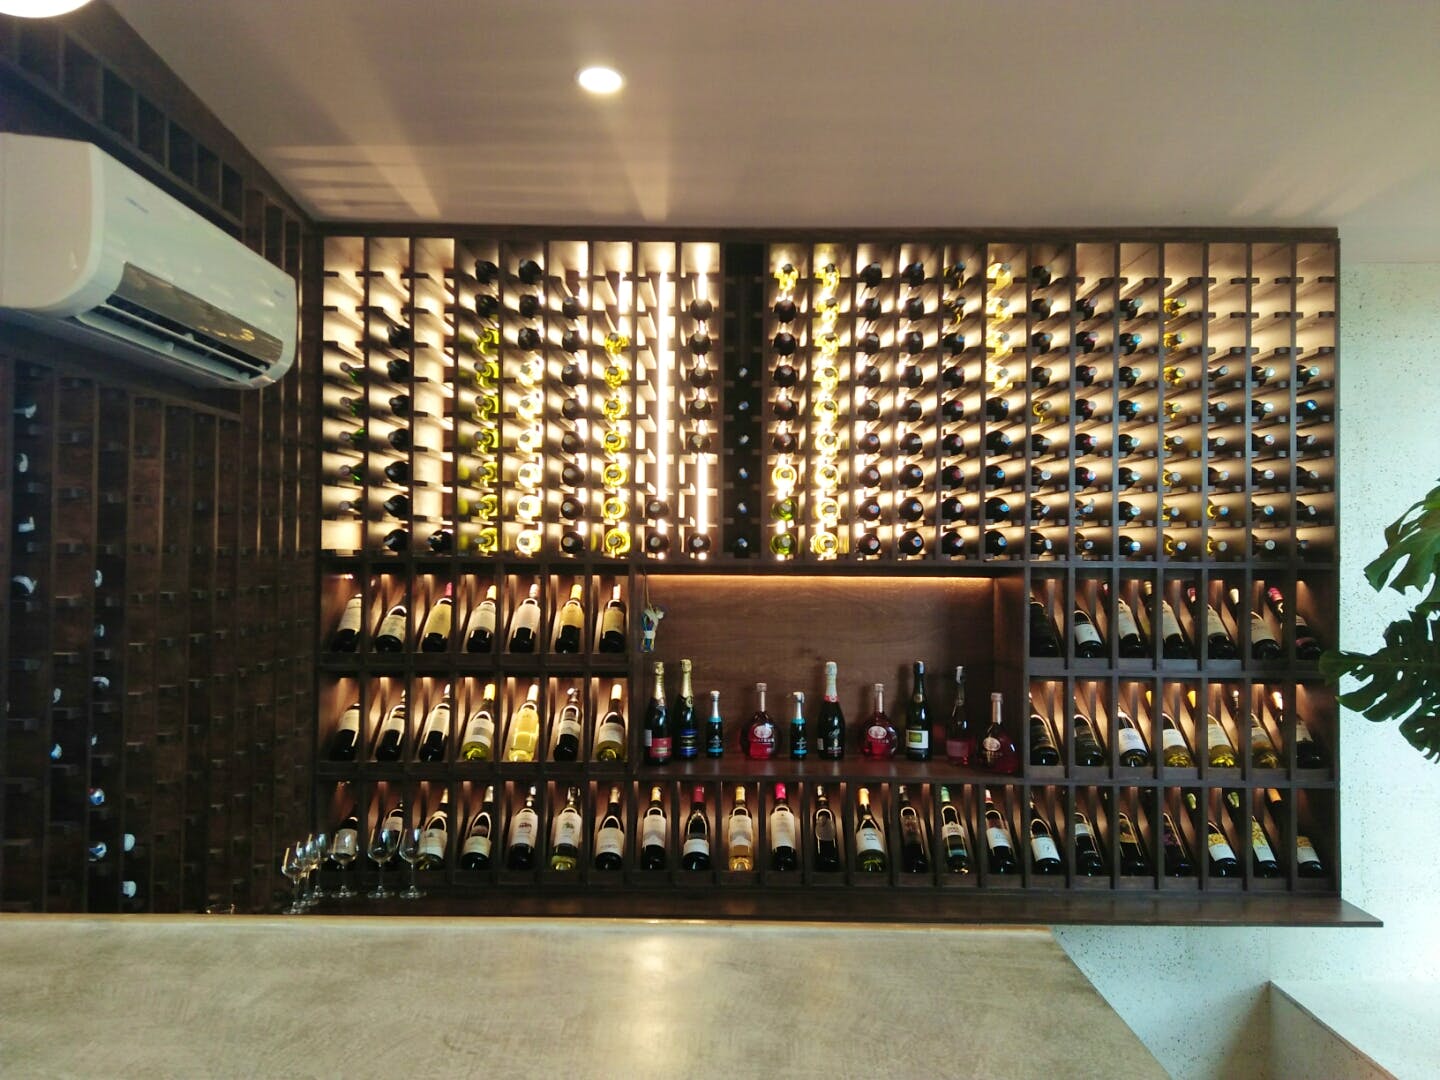 Wine cellar,Winery,Wine rack,Wine bottle,Wall,Architecture,Wine,Building,Interior design,Bottle